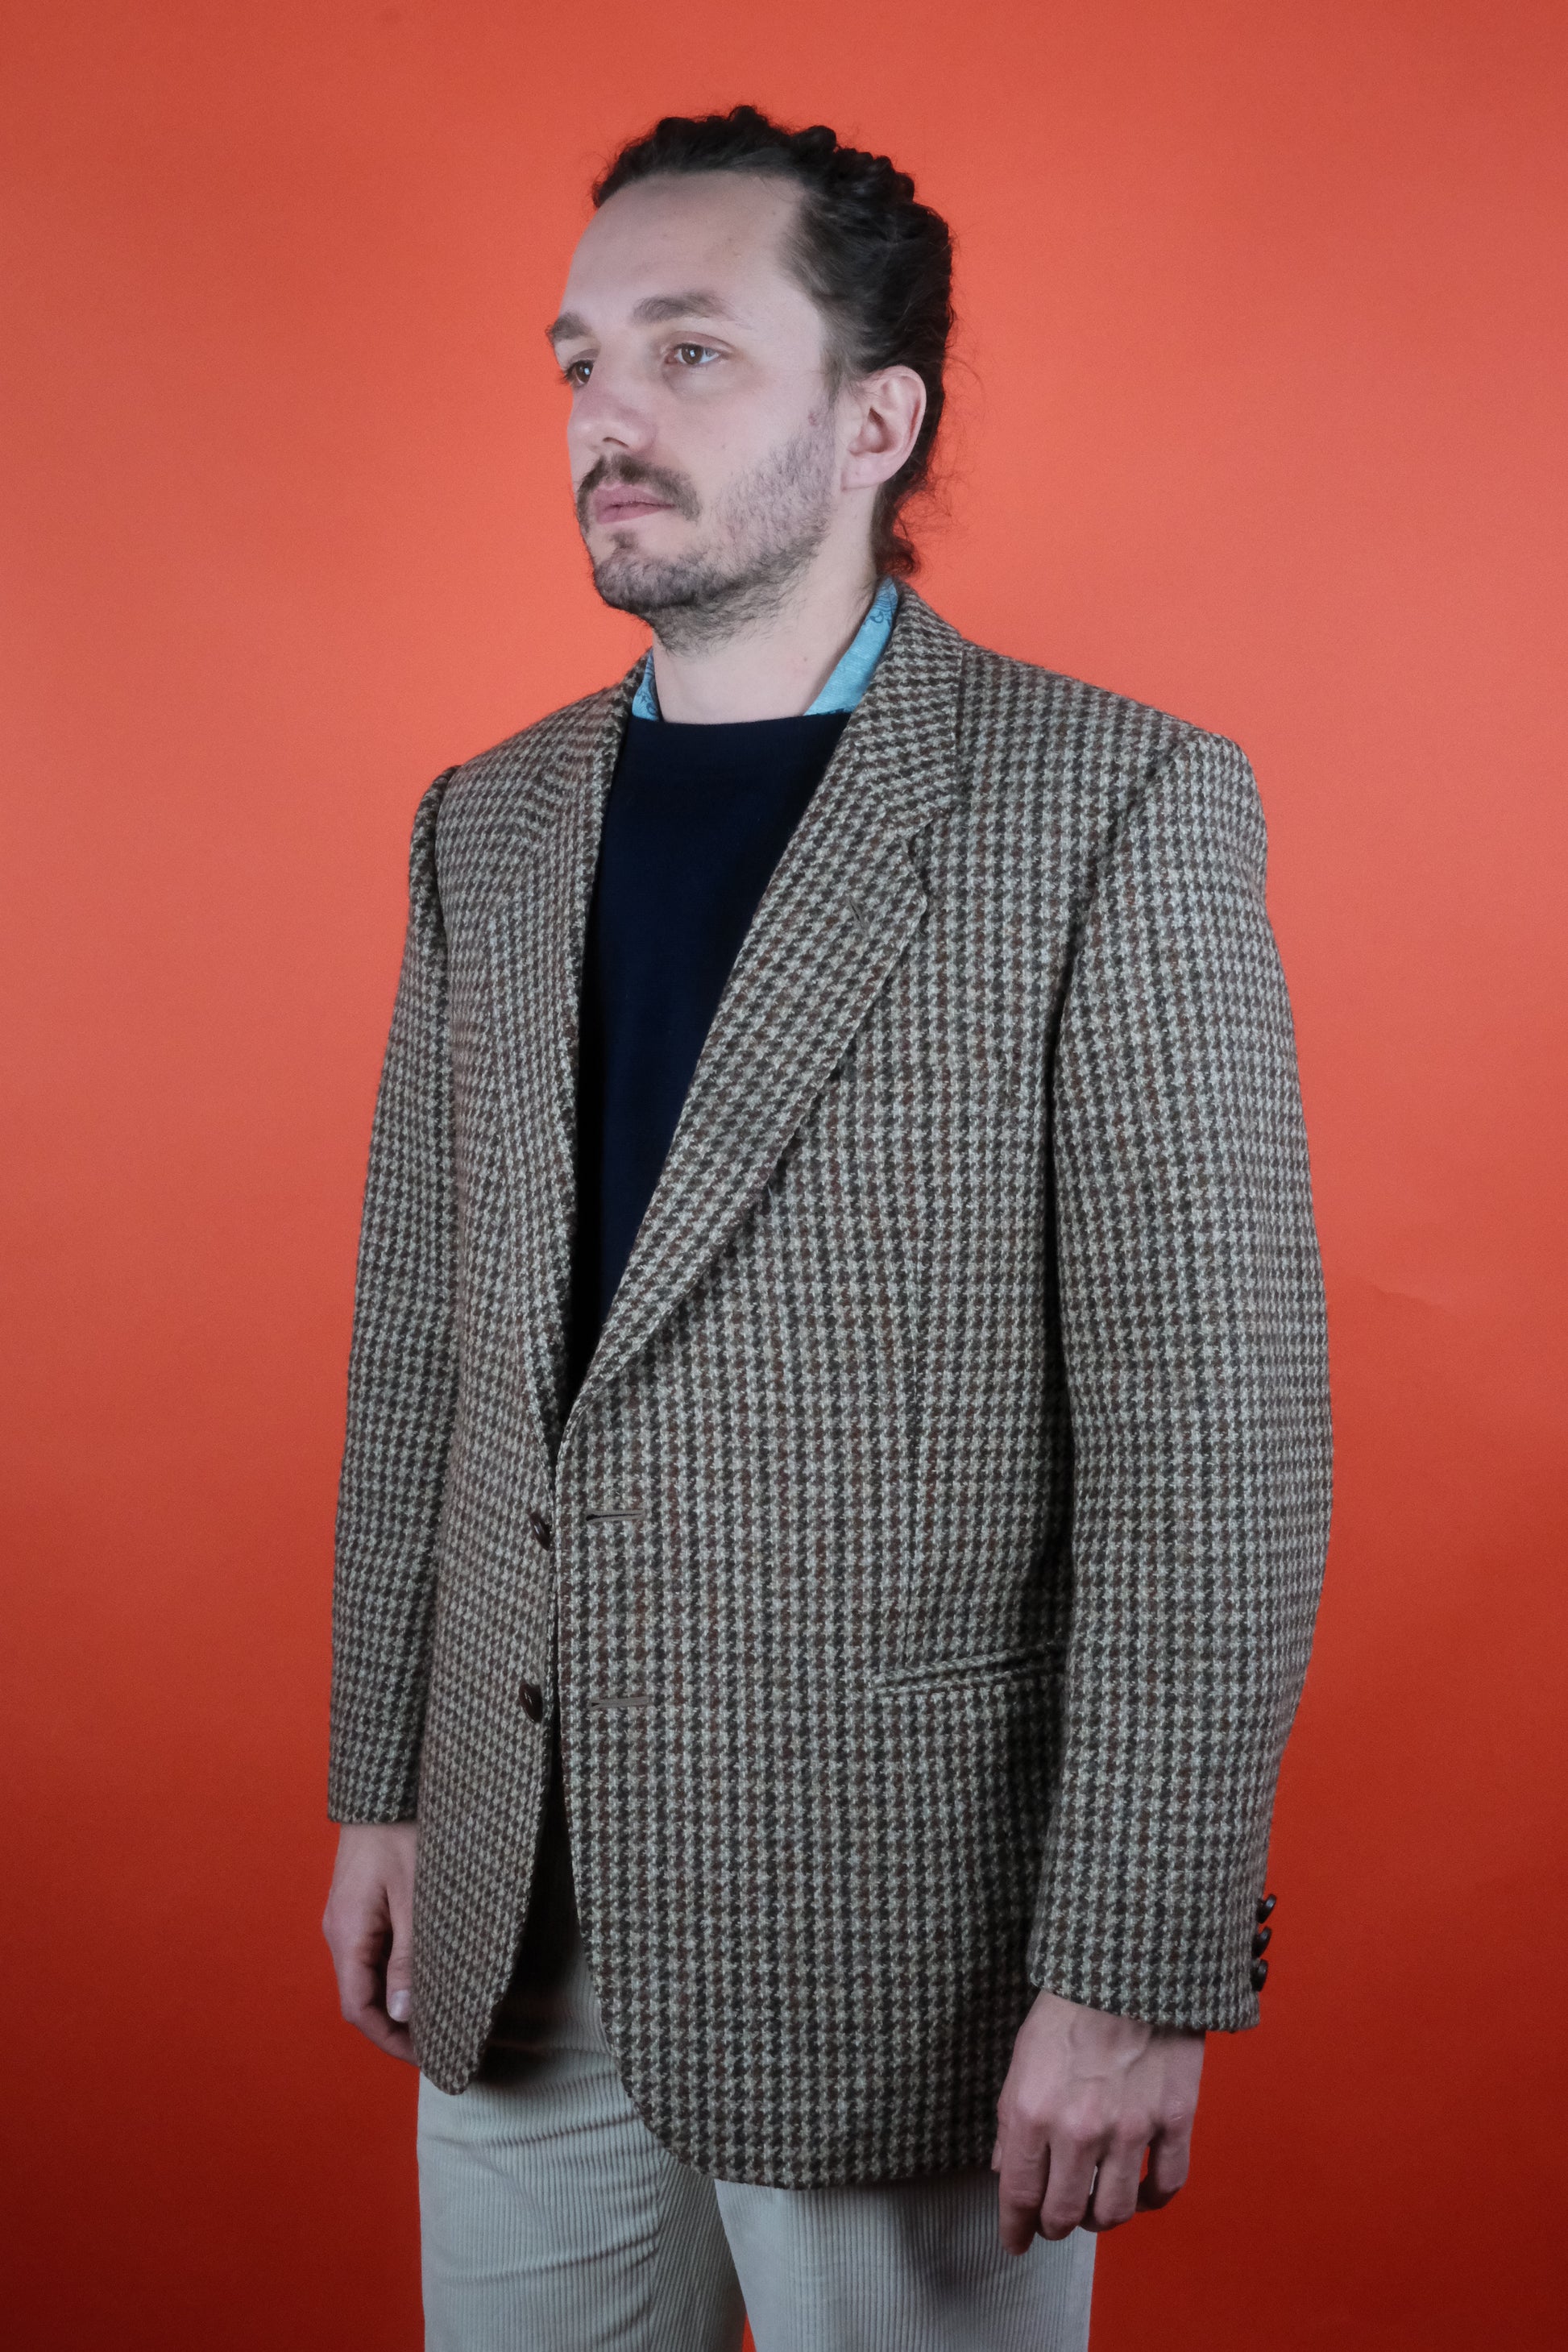 St Michael Harris Tweed Wool Suit Jacket 'L' - vintage clothing clochard92.com